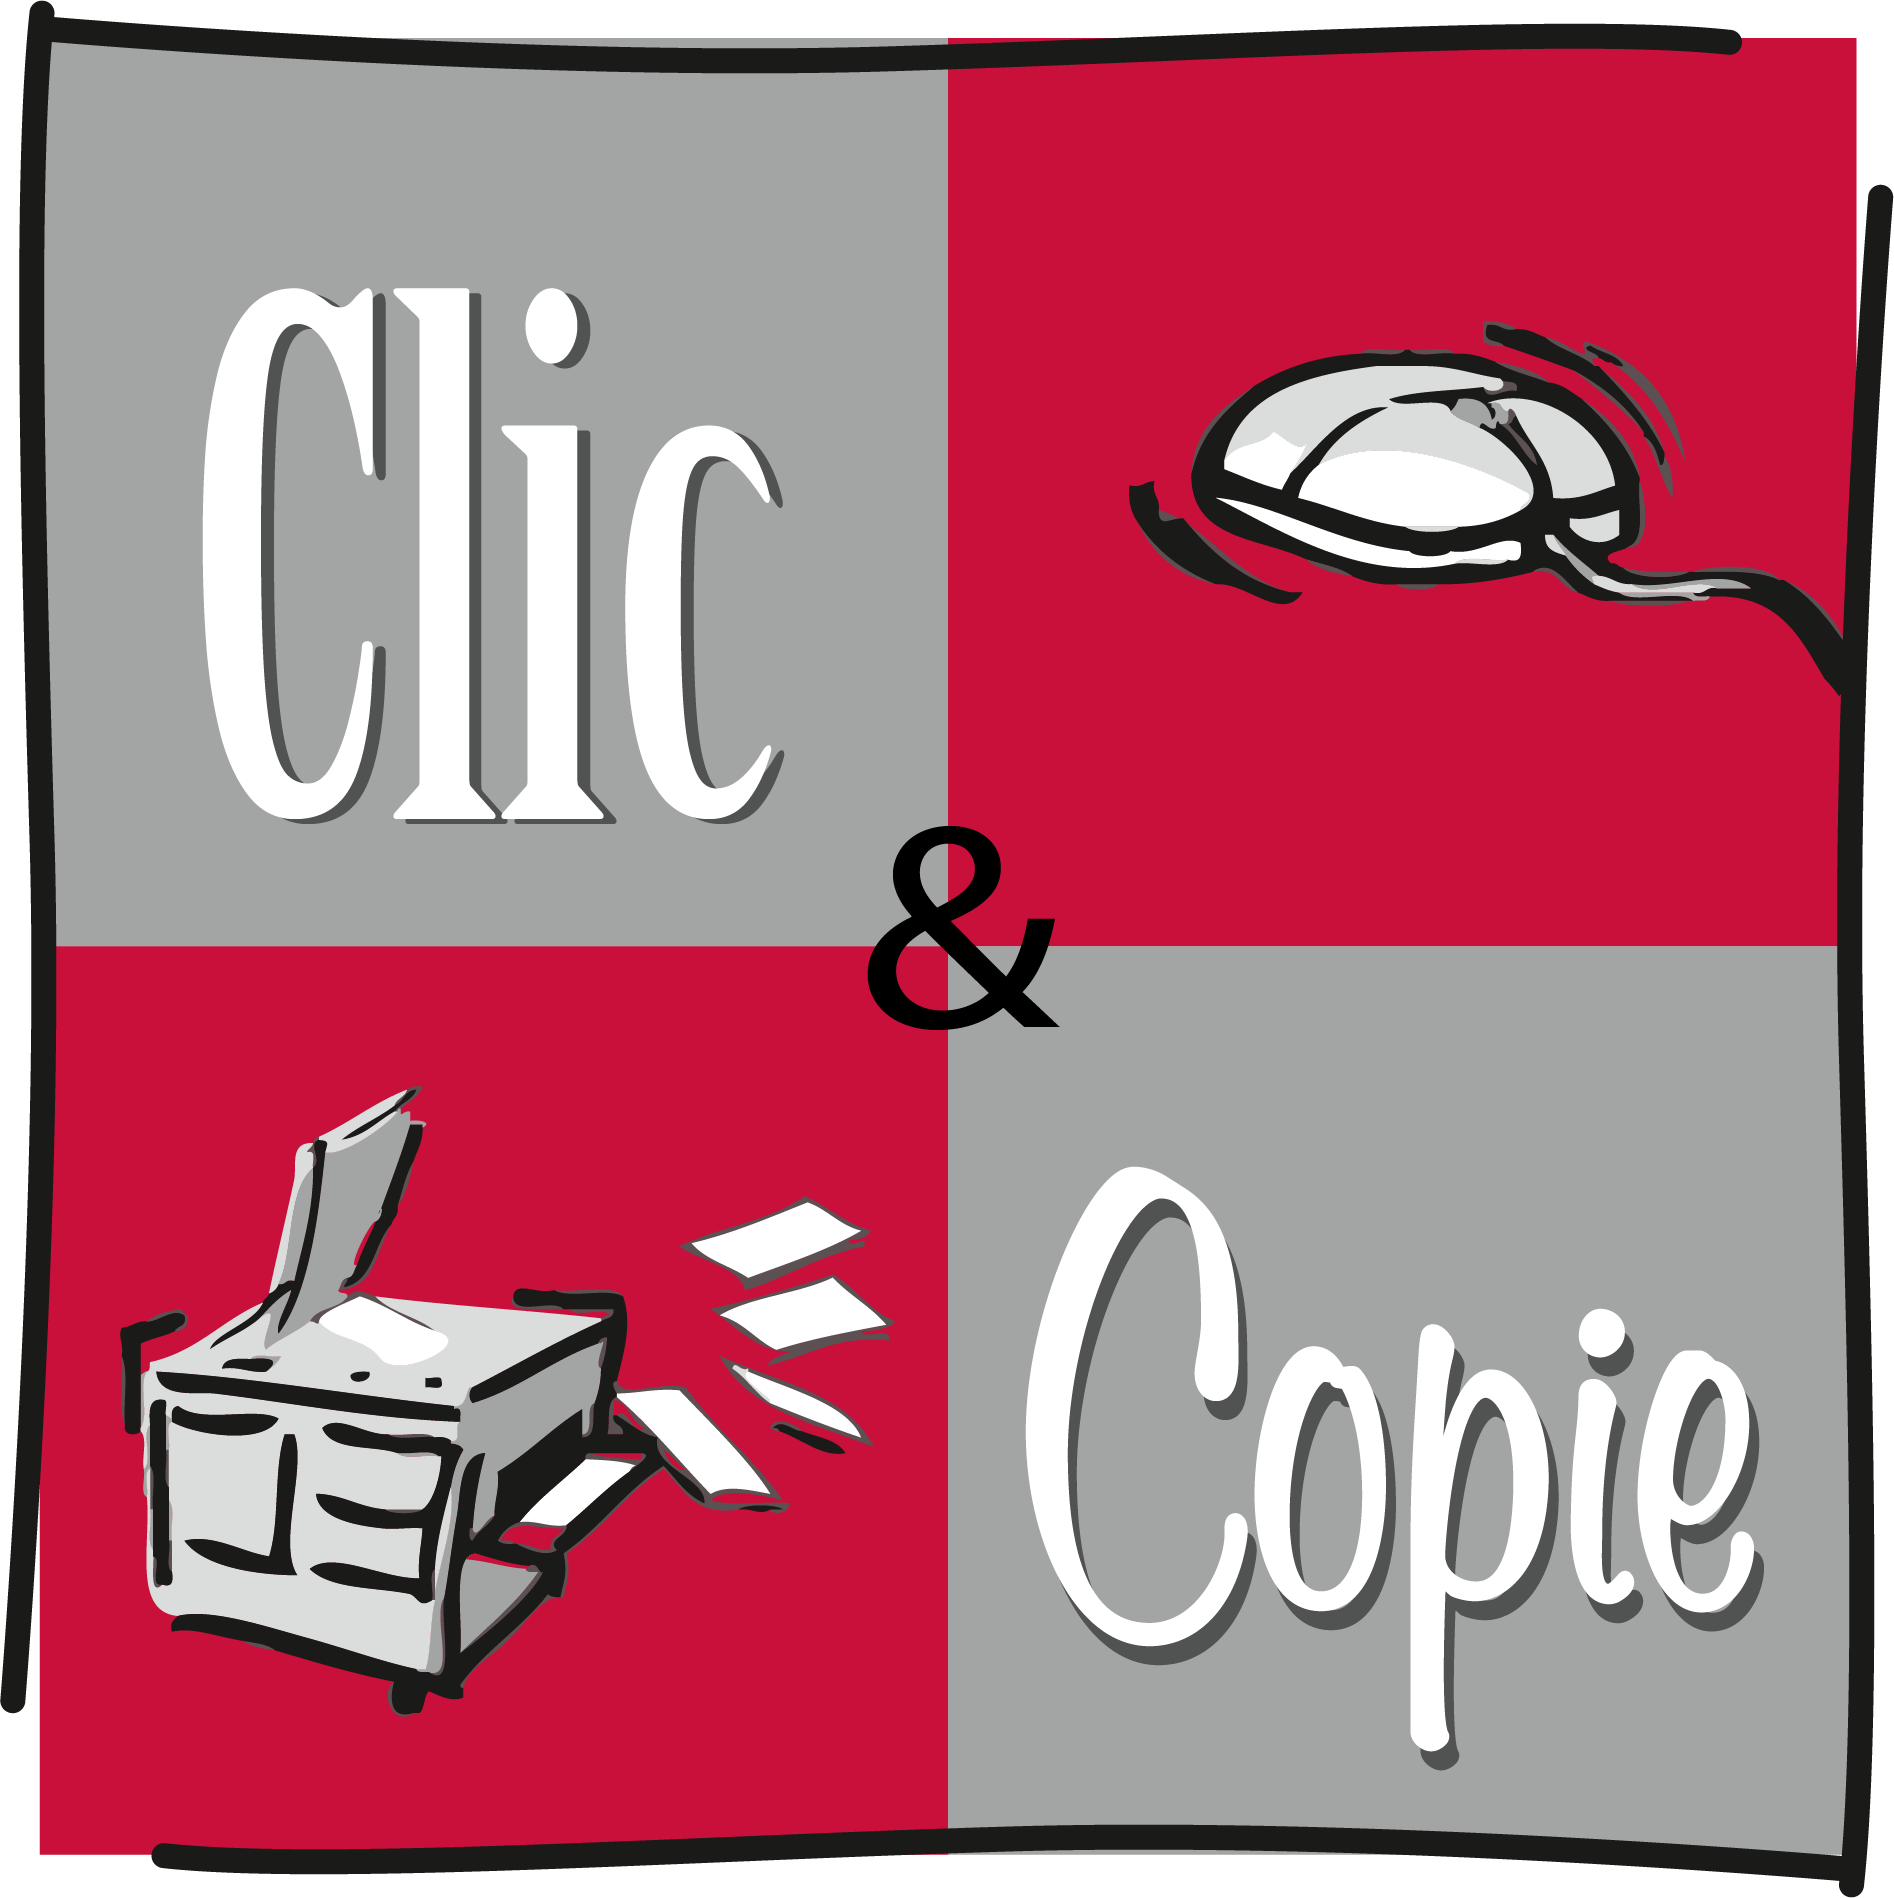 Logo Clic & Copiz